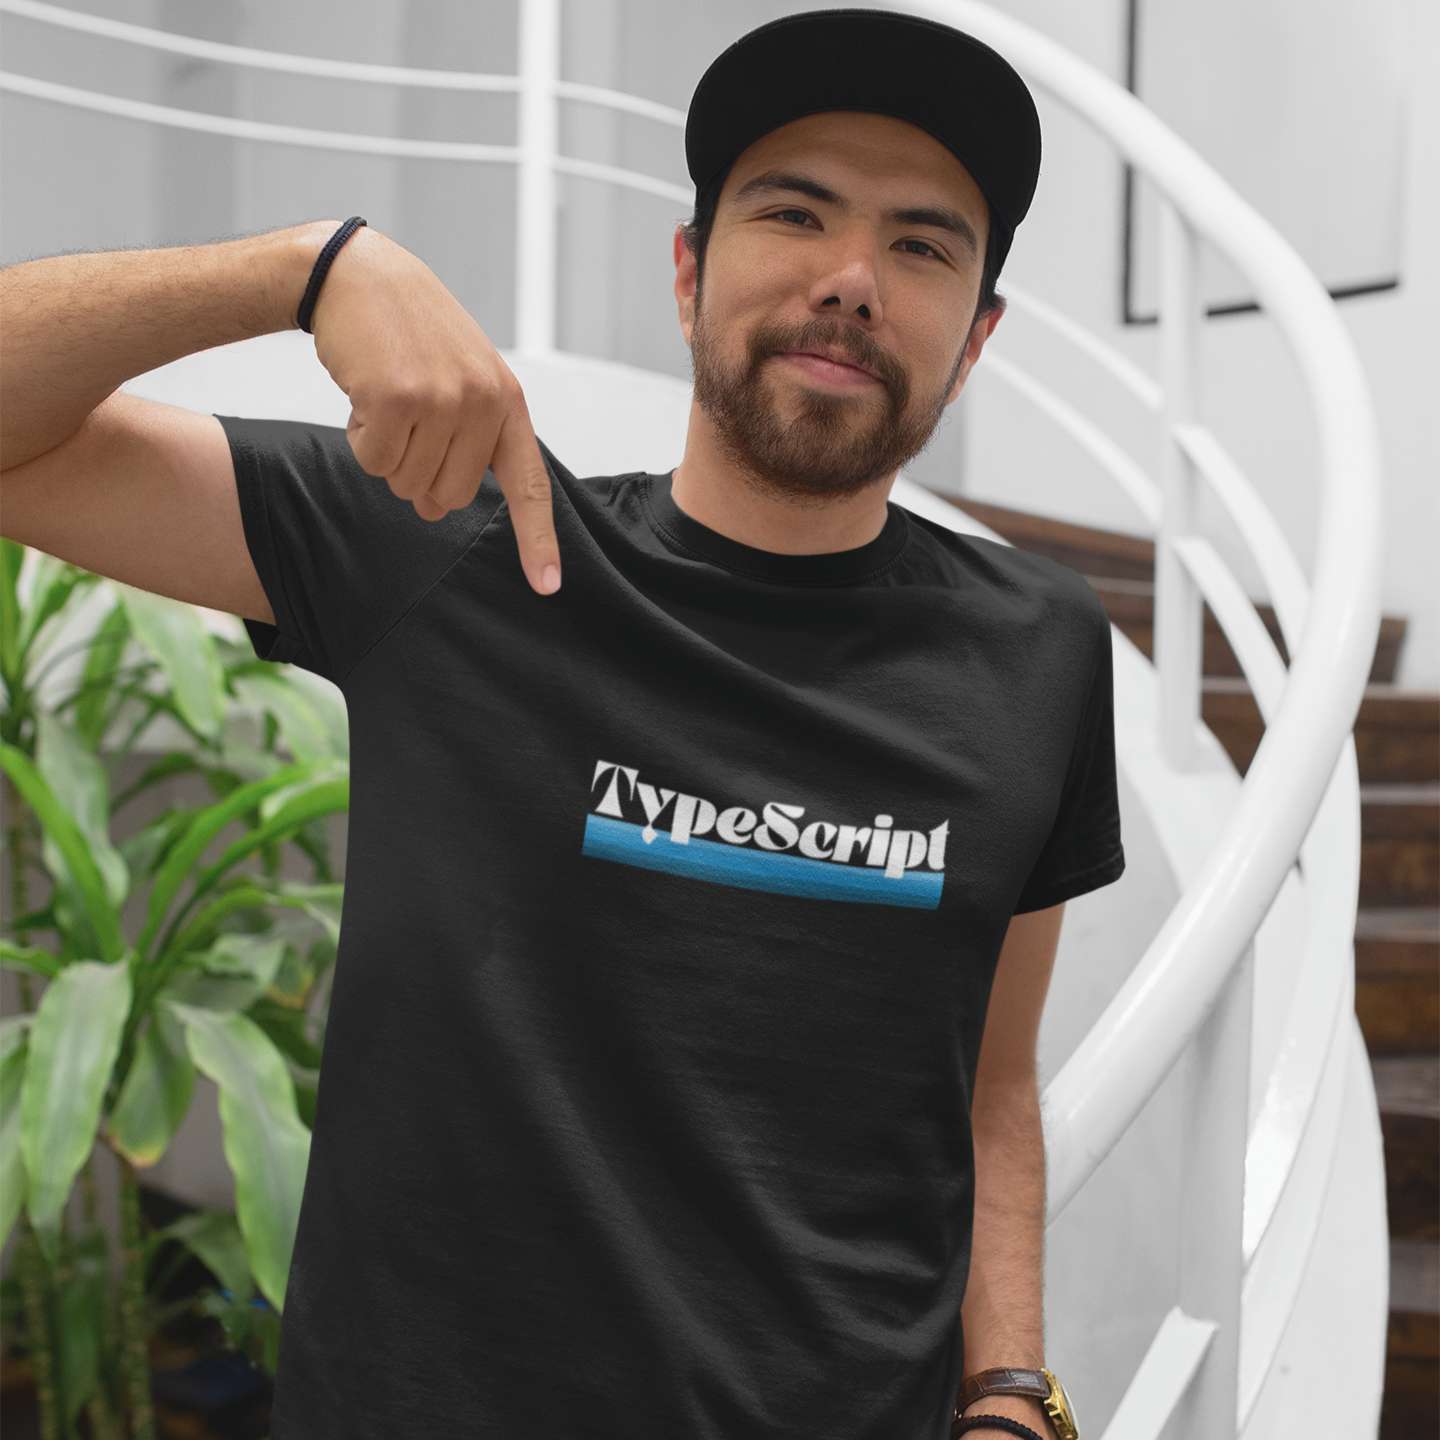 A male software developer wearing a t-shirt that says "TypeScript"